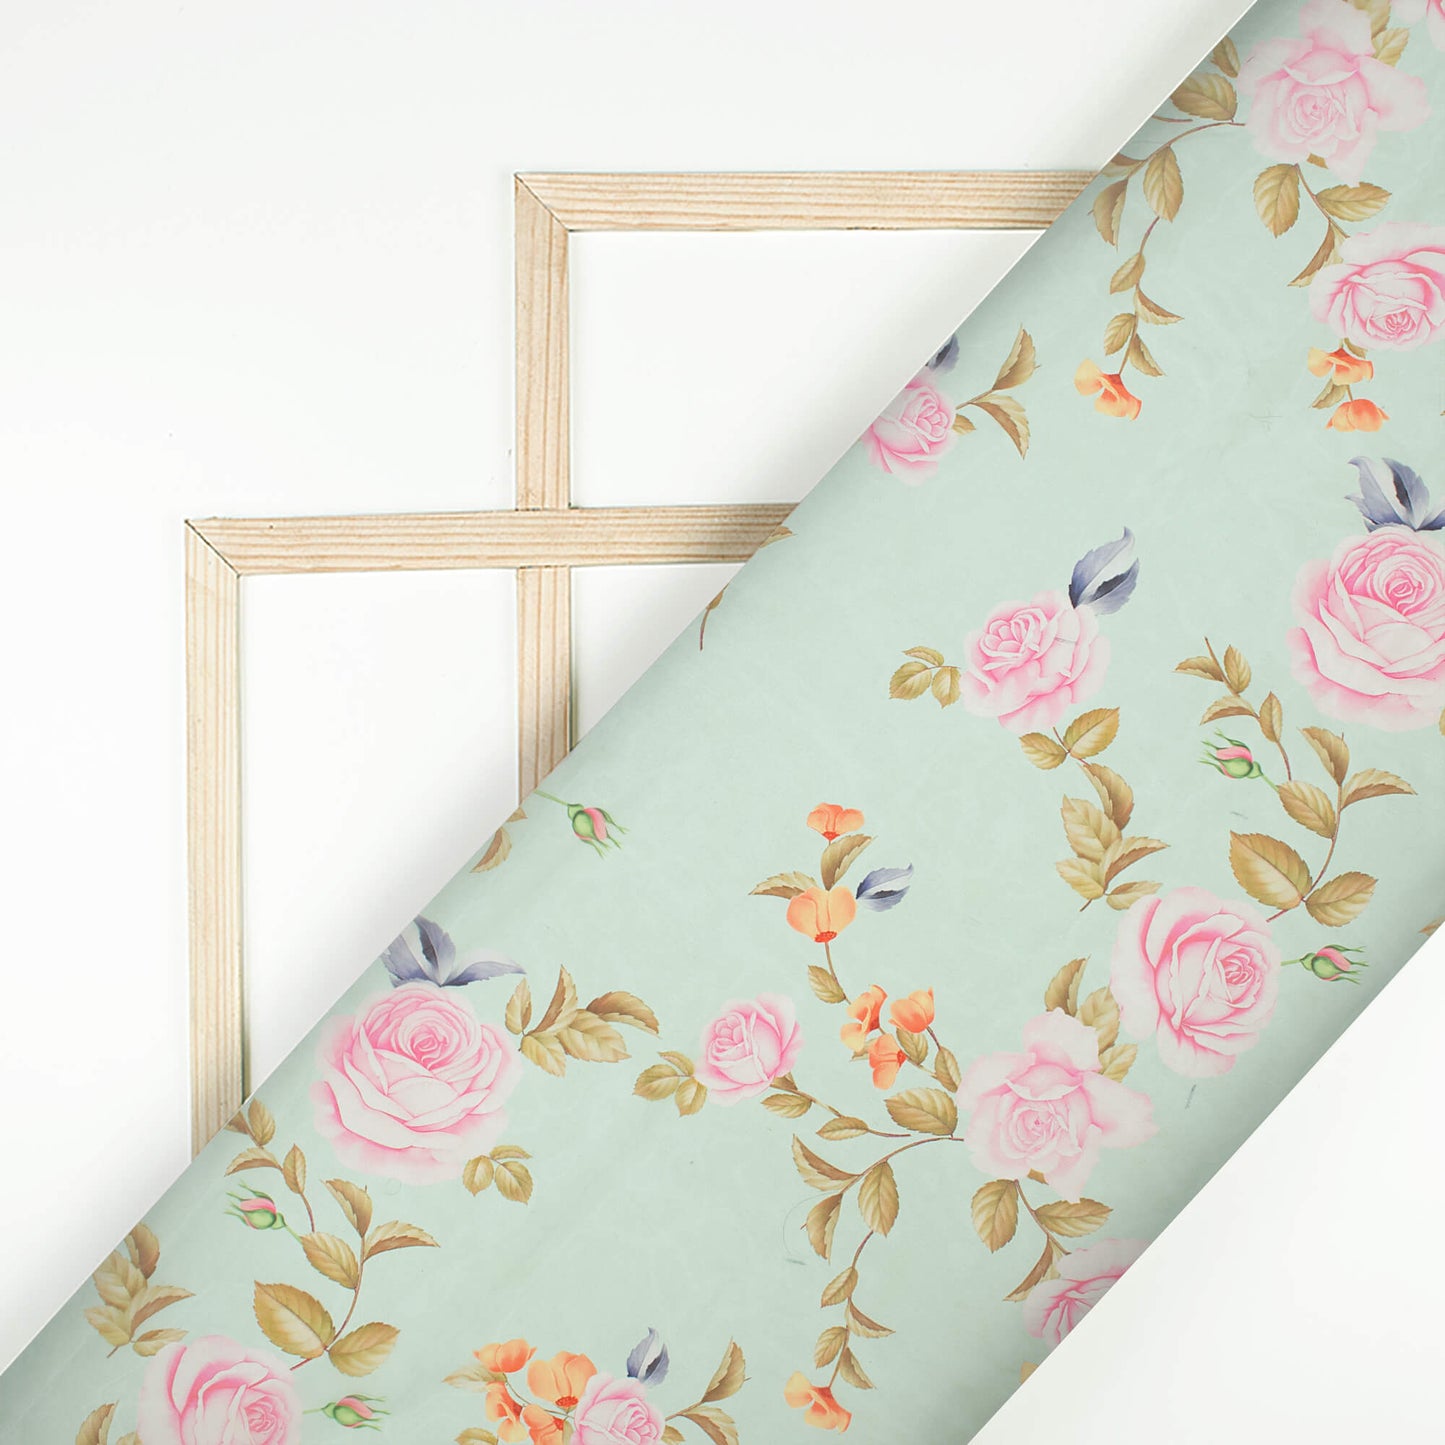 Tea Green And Taffy Pink Floral Pattern Digital Print Organza Satin Fabric